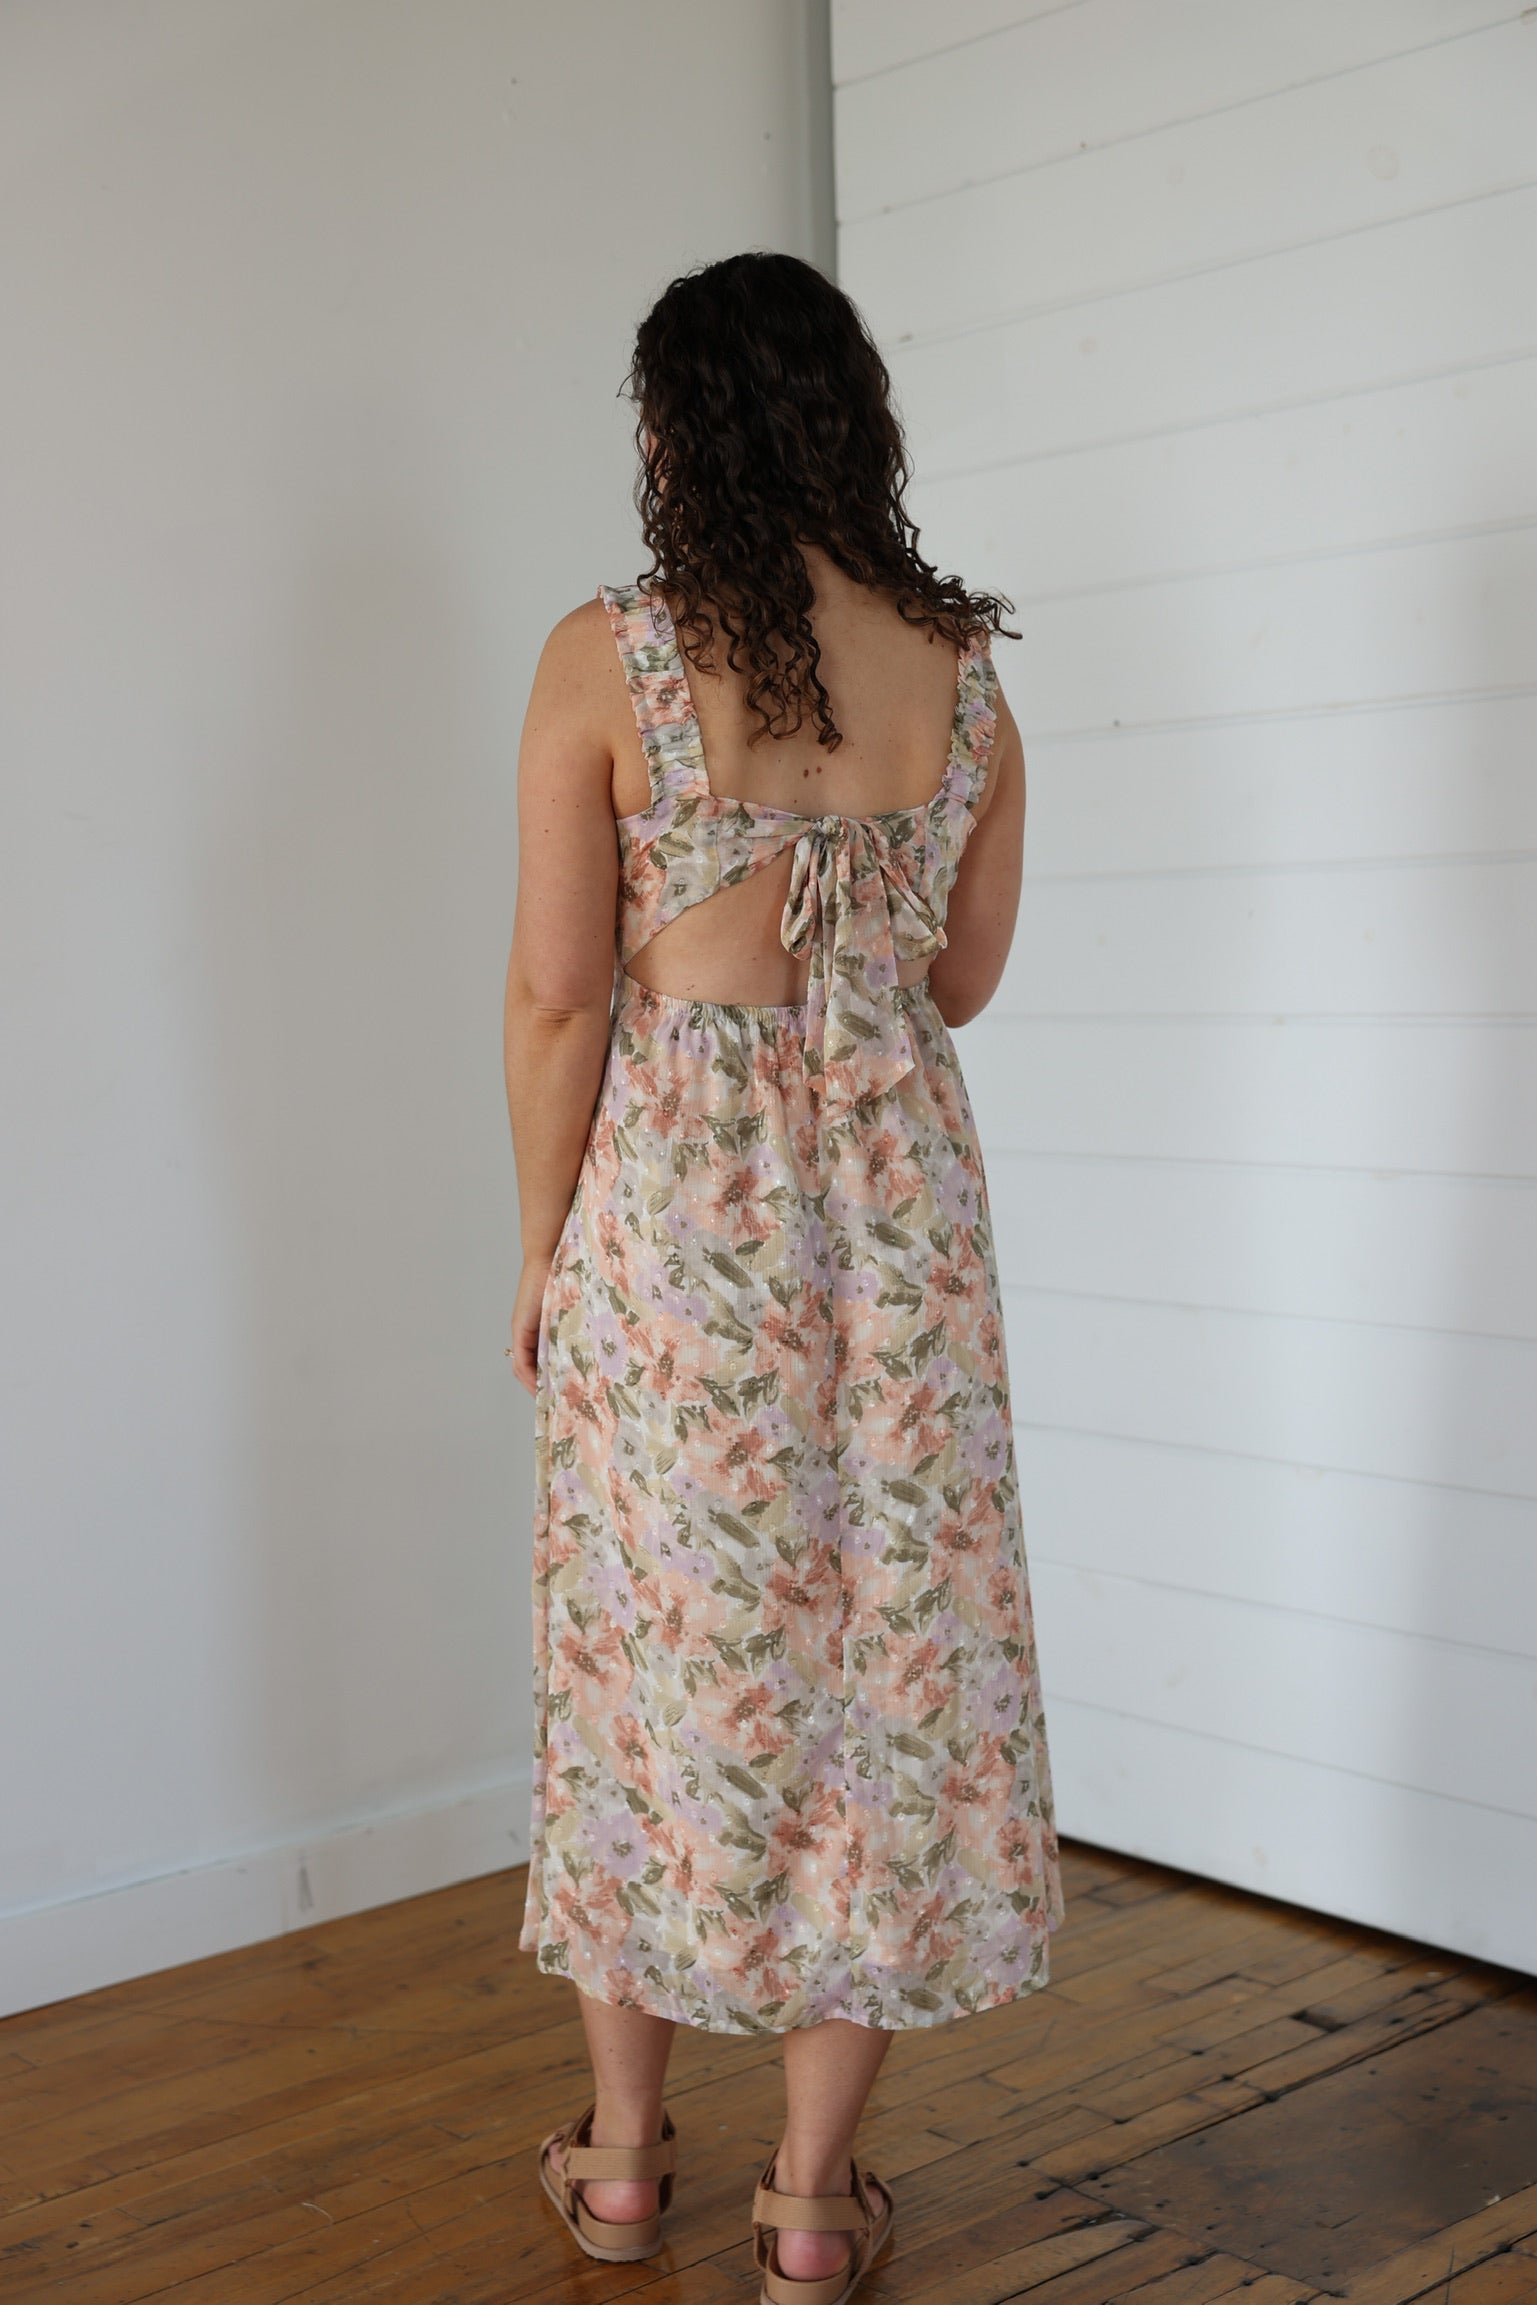 Dune Flowers Midi Dress (One Left - Size XS)